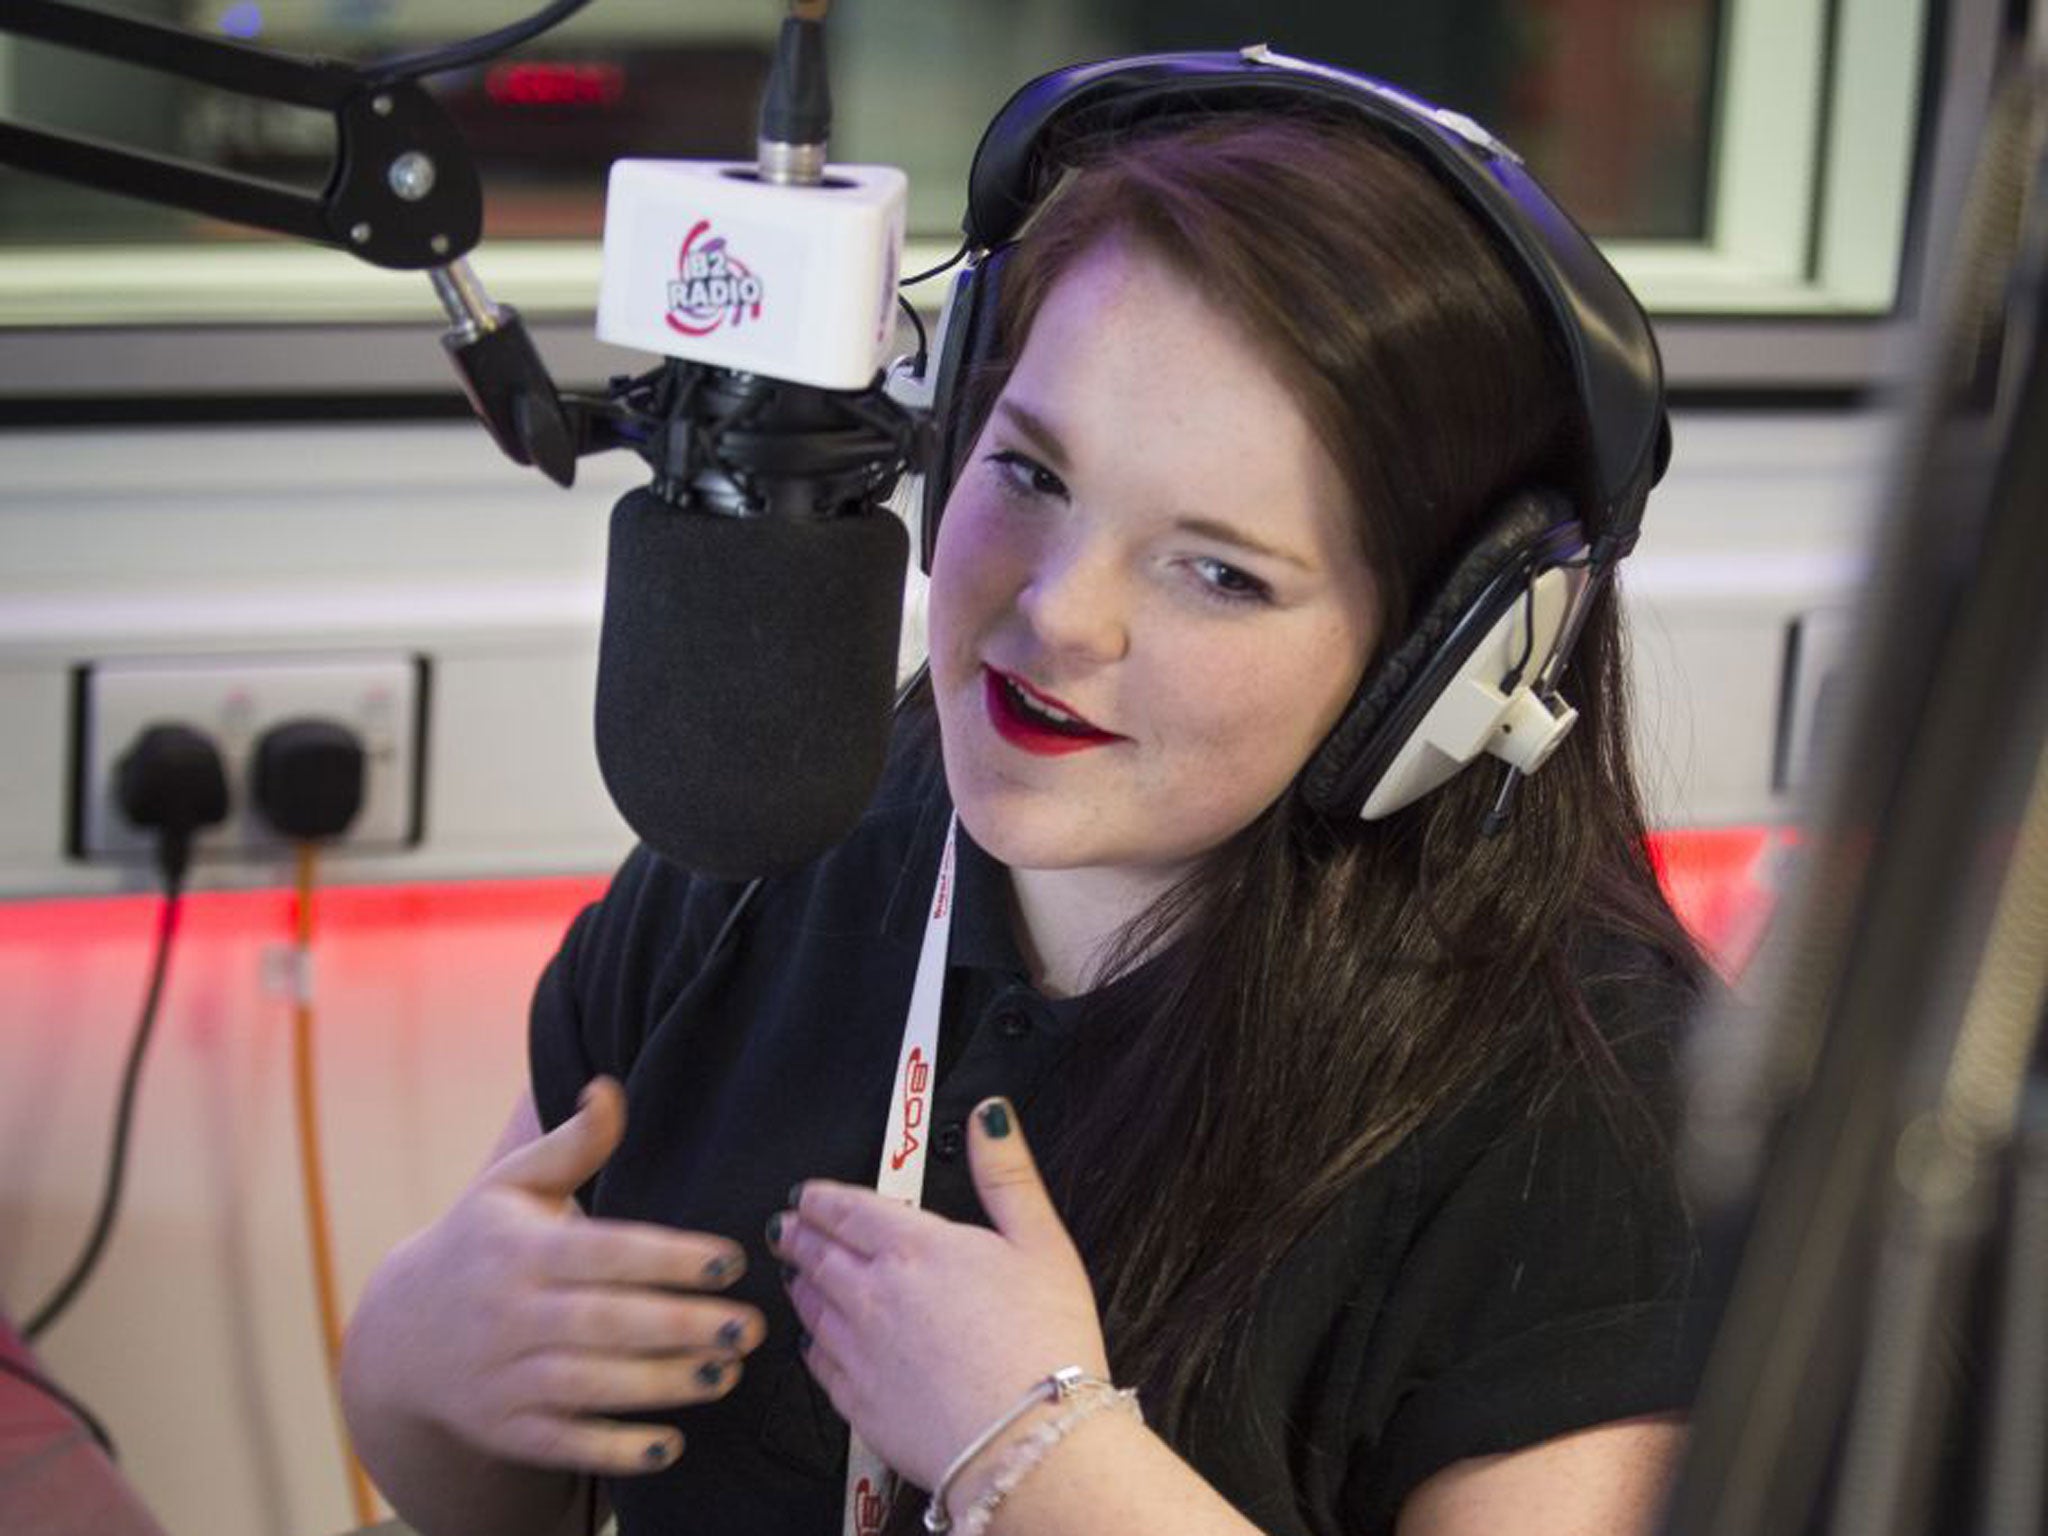 Listen to this: Rosie Mason live on air